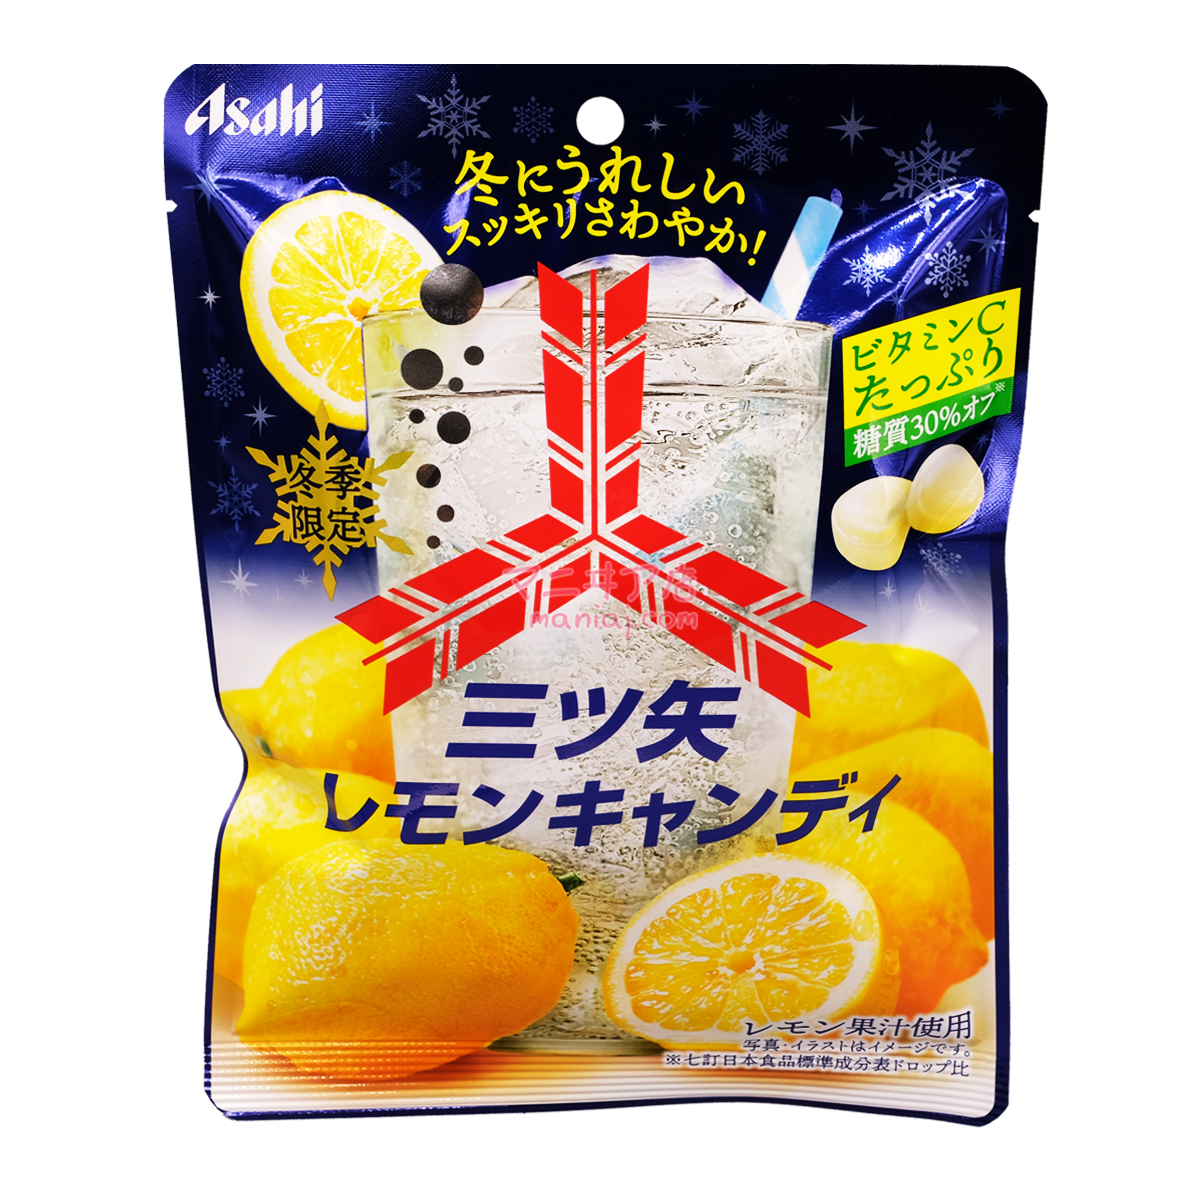 Mitsuya lemon candy